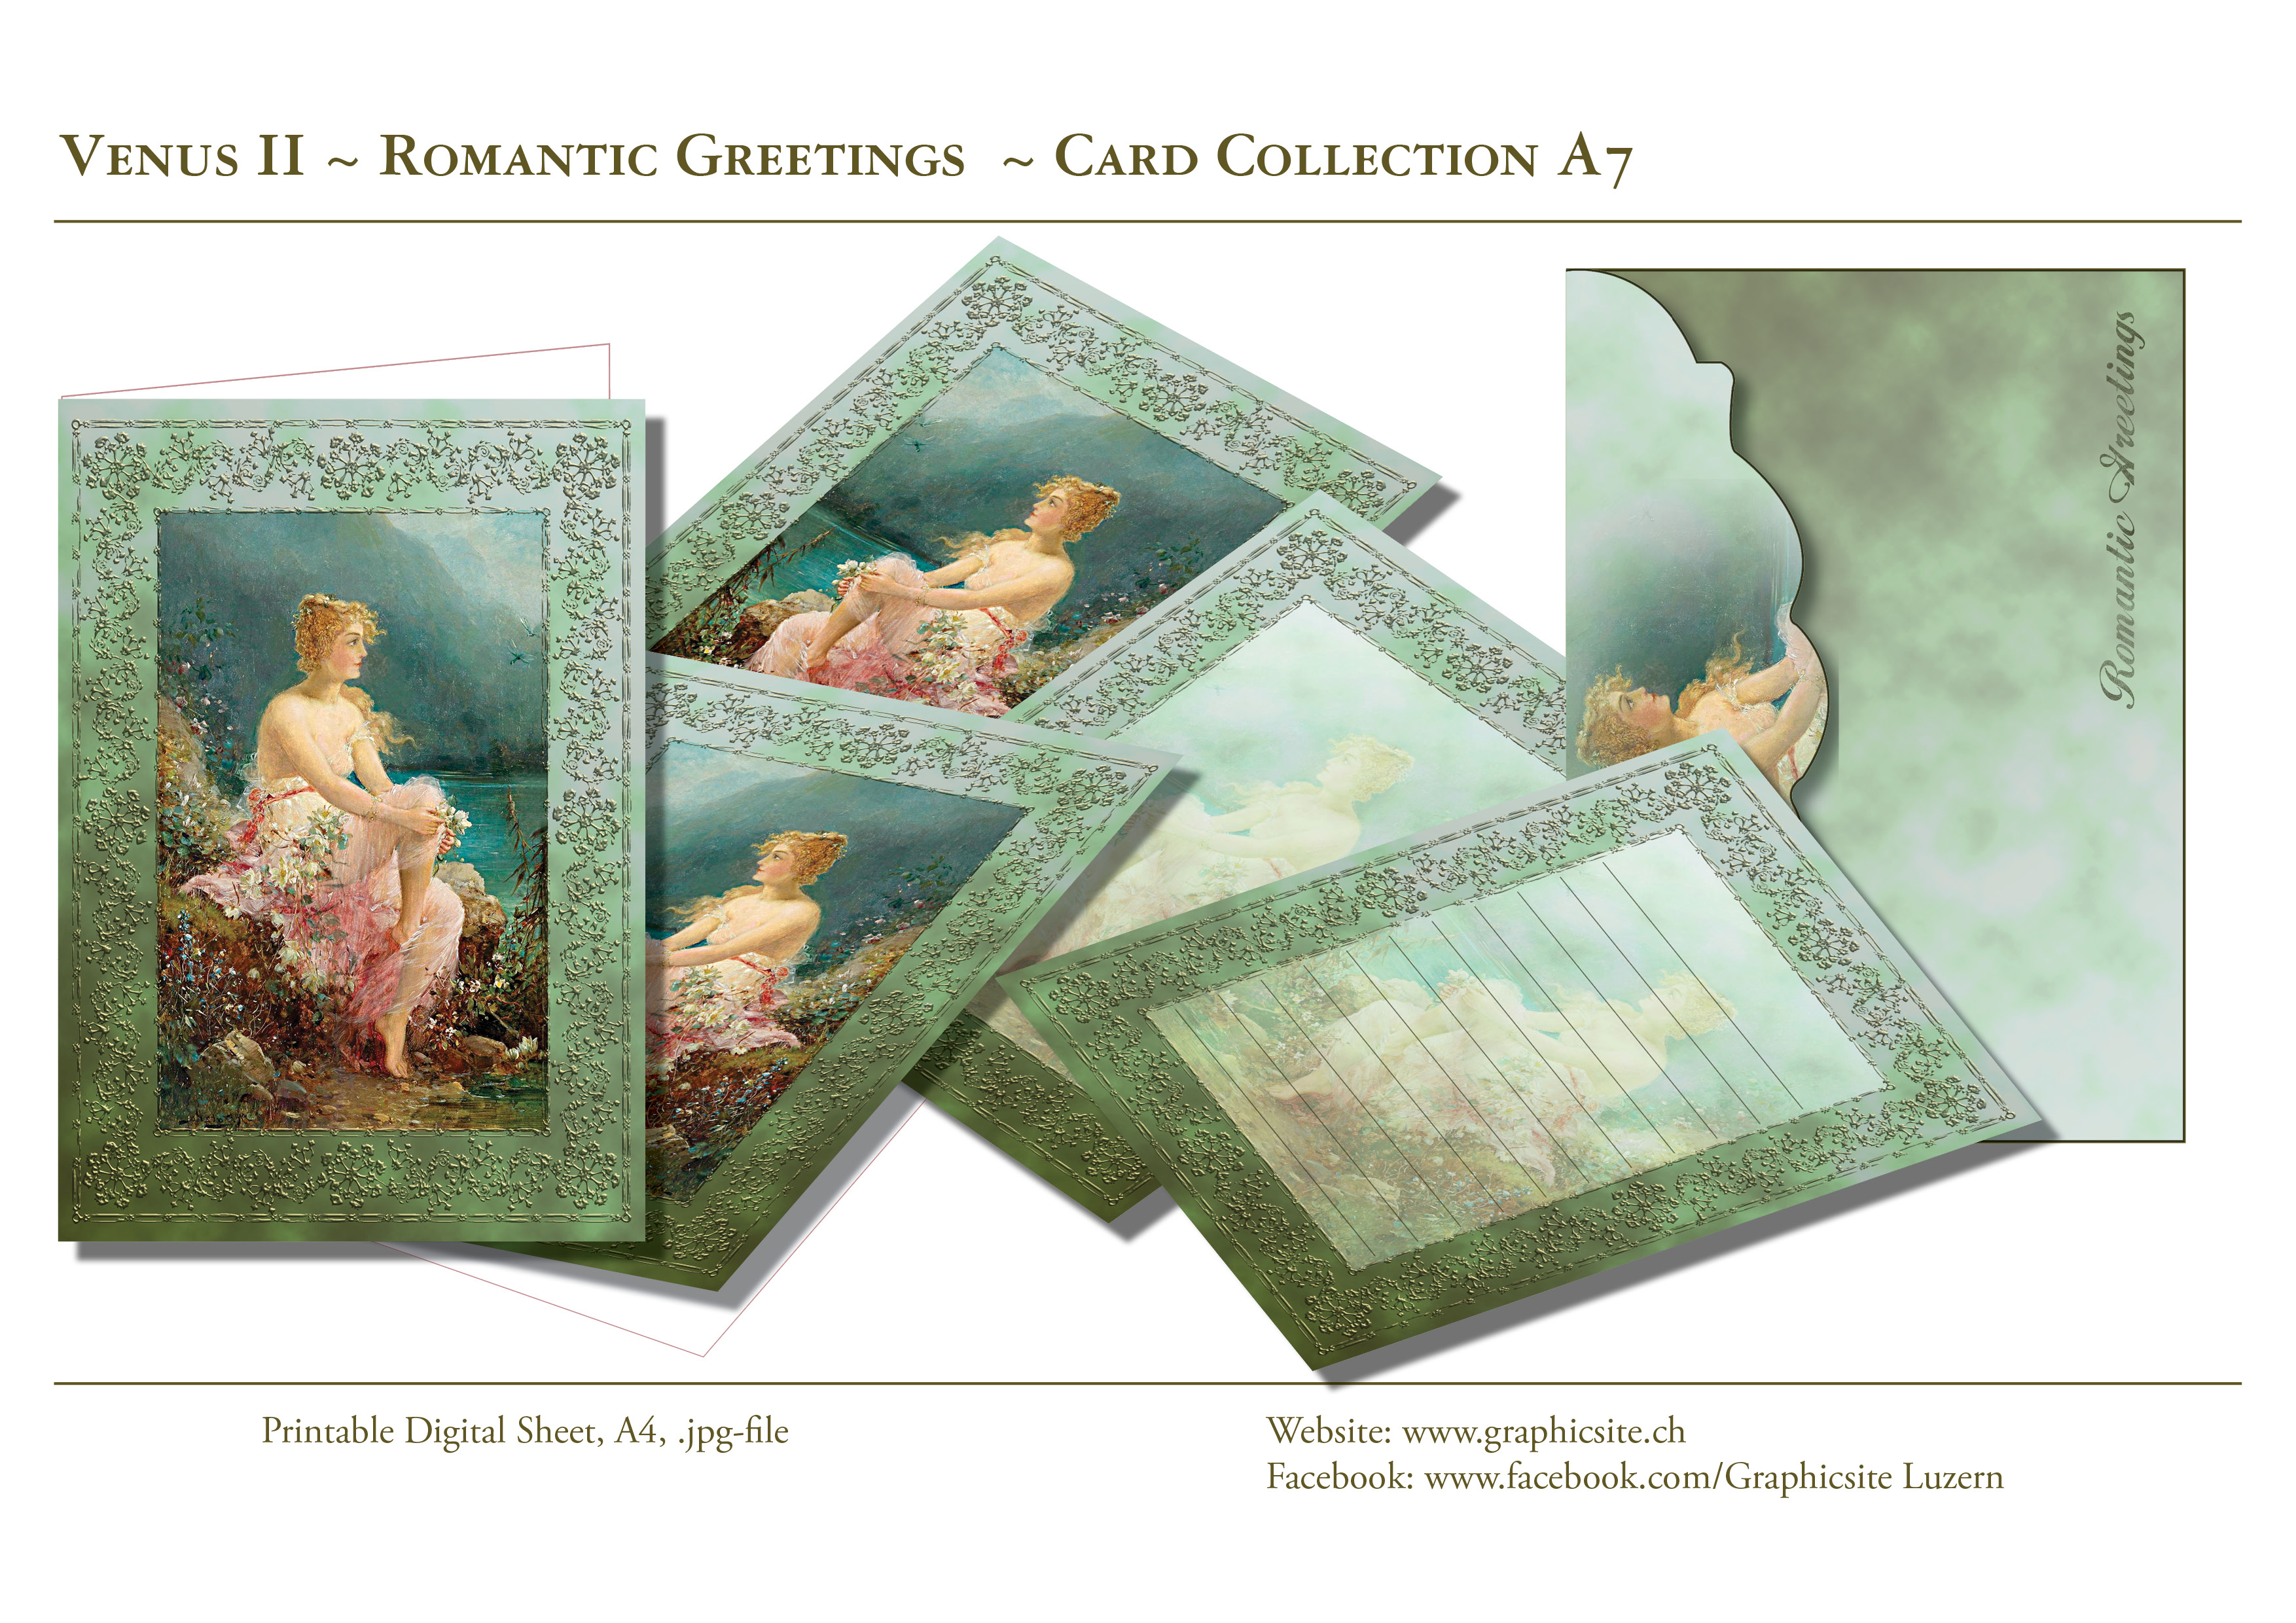 Printable Digital Sheets - CardCollection A7- Venus II - Romantic, vintage, postcards, greetingcards, 